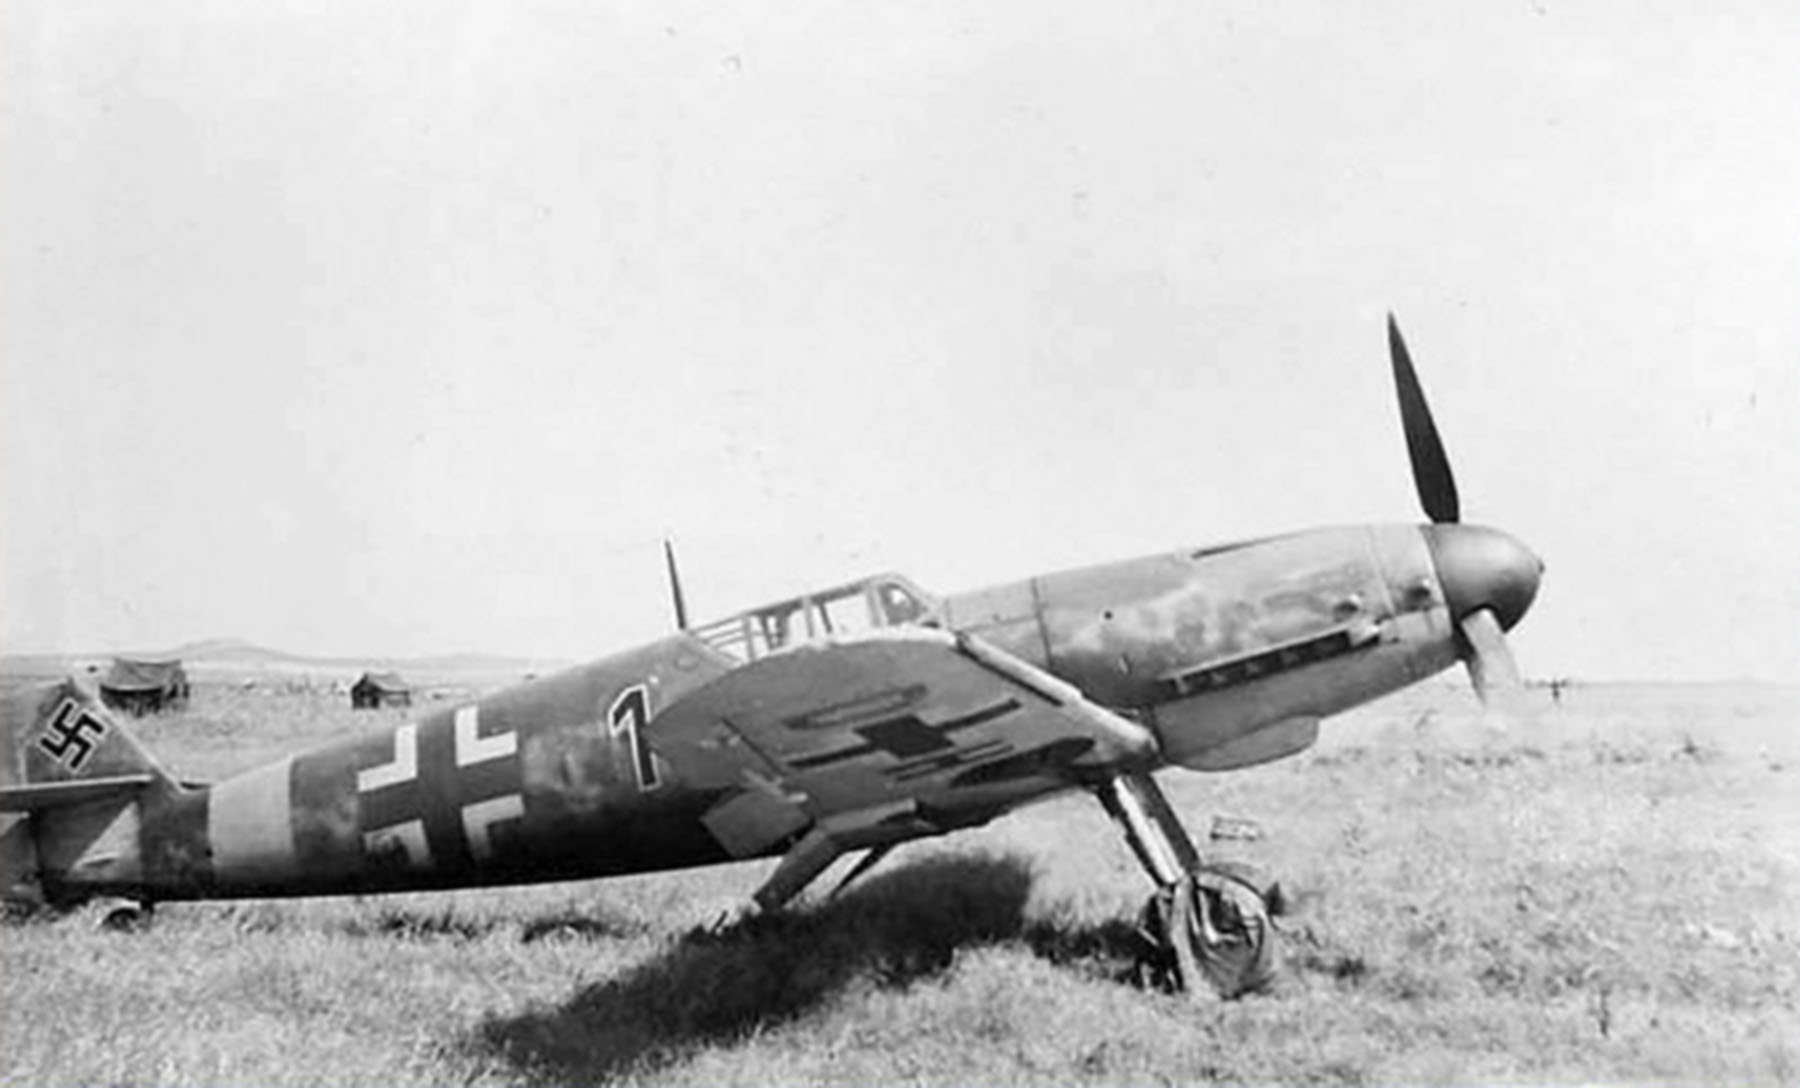 Messerschmitt Bf 109G2 Black 1 Stkz DH+UC WNr 13554 unknown unit and location 1942 01